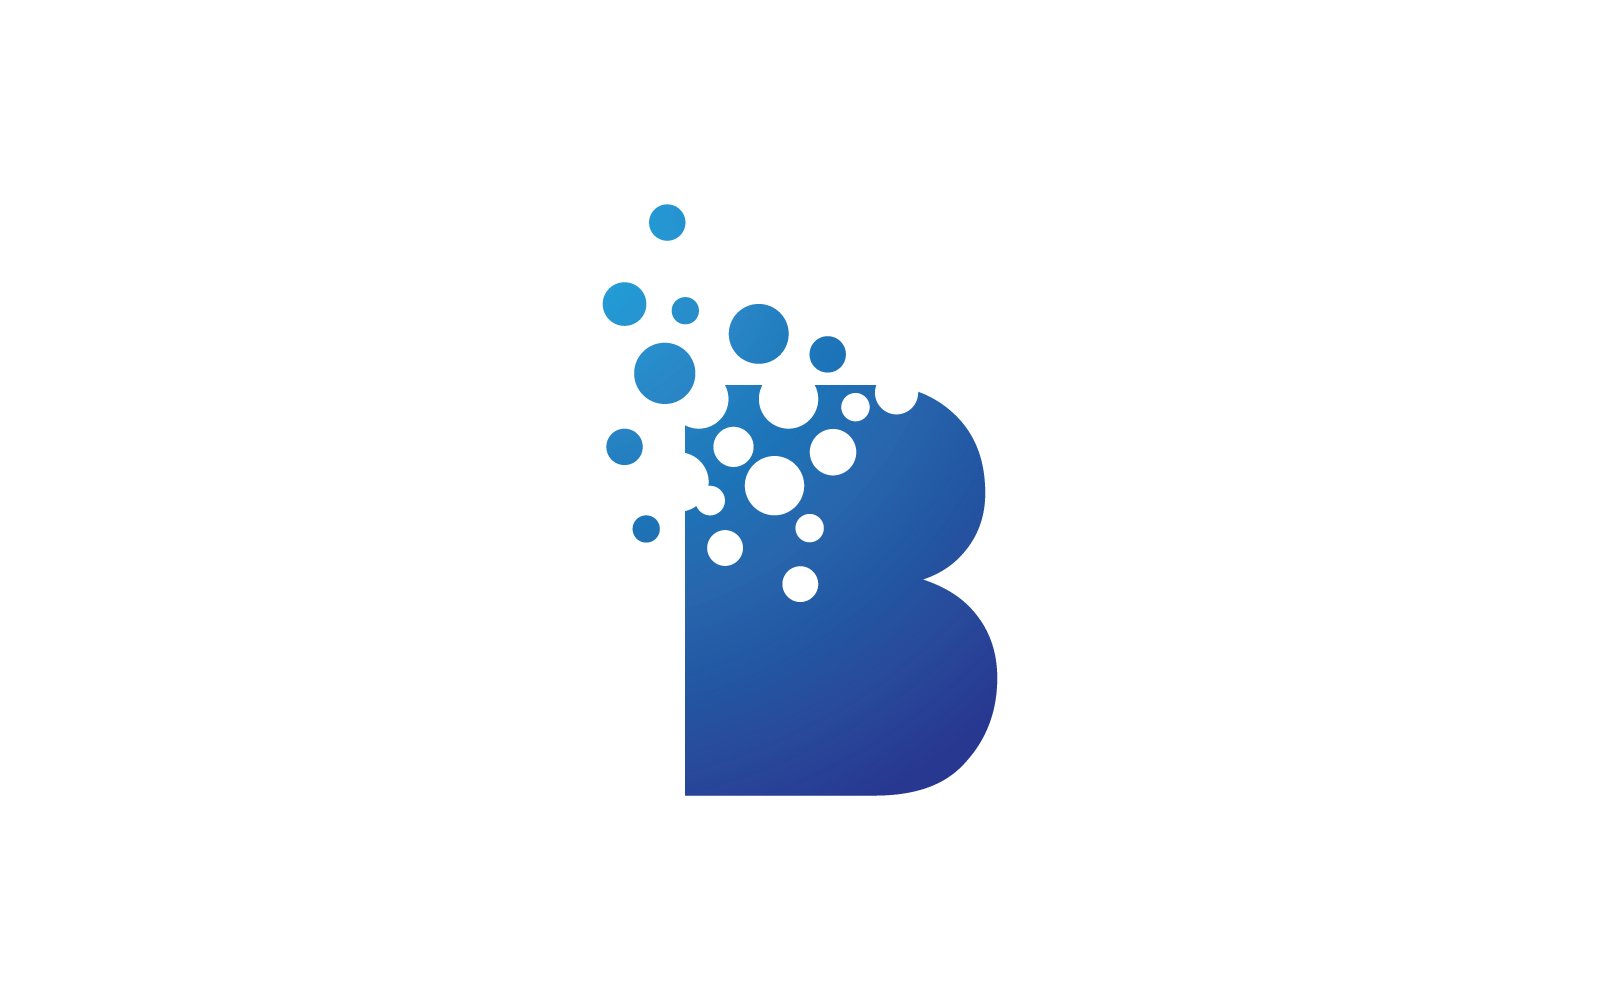 B harfi piksel logo vektör düz tasarımı